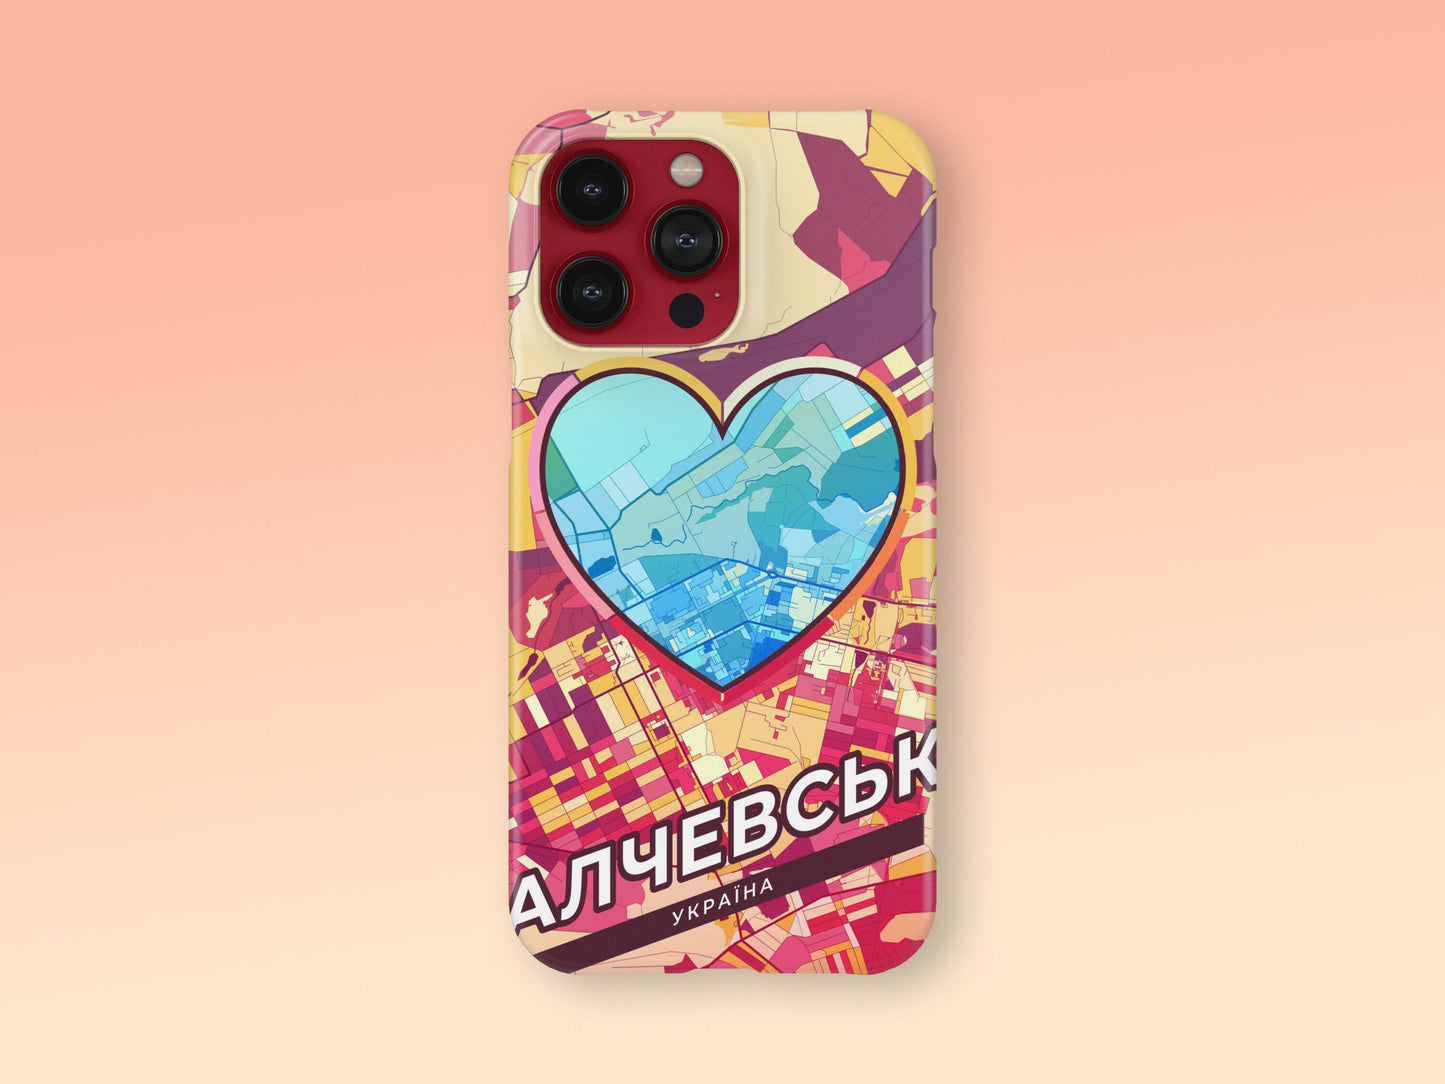 Alchevsk Ukraine slim phone case with colorful icon. Birthday, wedding or housewarming gift. Couple match cases. 2